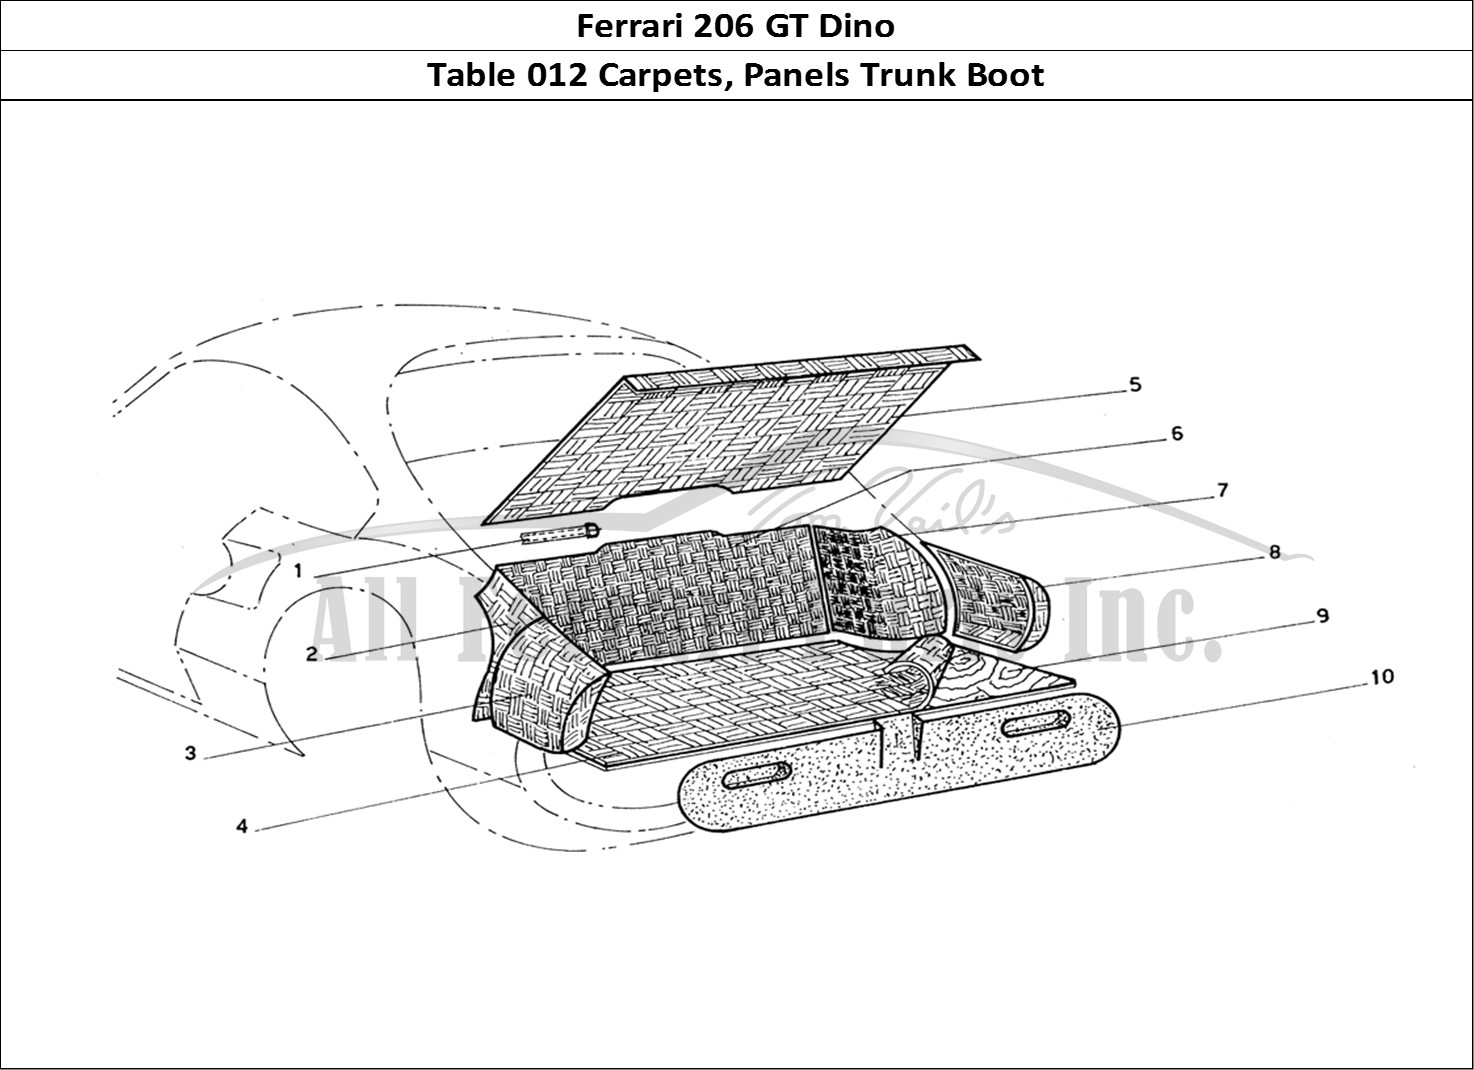 Ferrari Parts Ferrari 206 GT Dino (Coachwork) Page 012 Boot Carpets & Panels